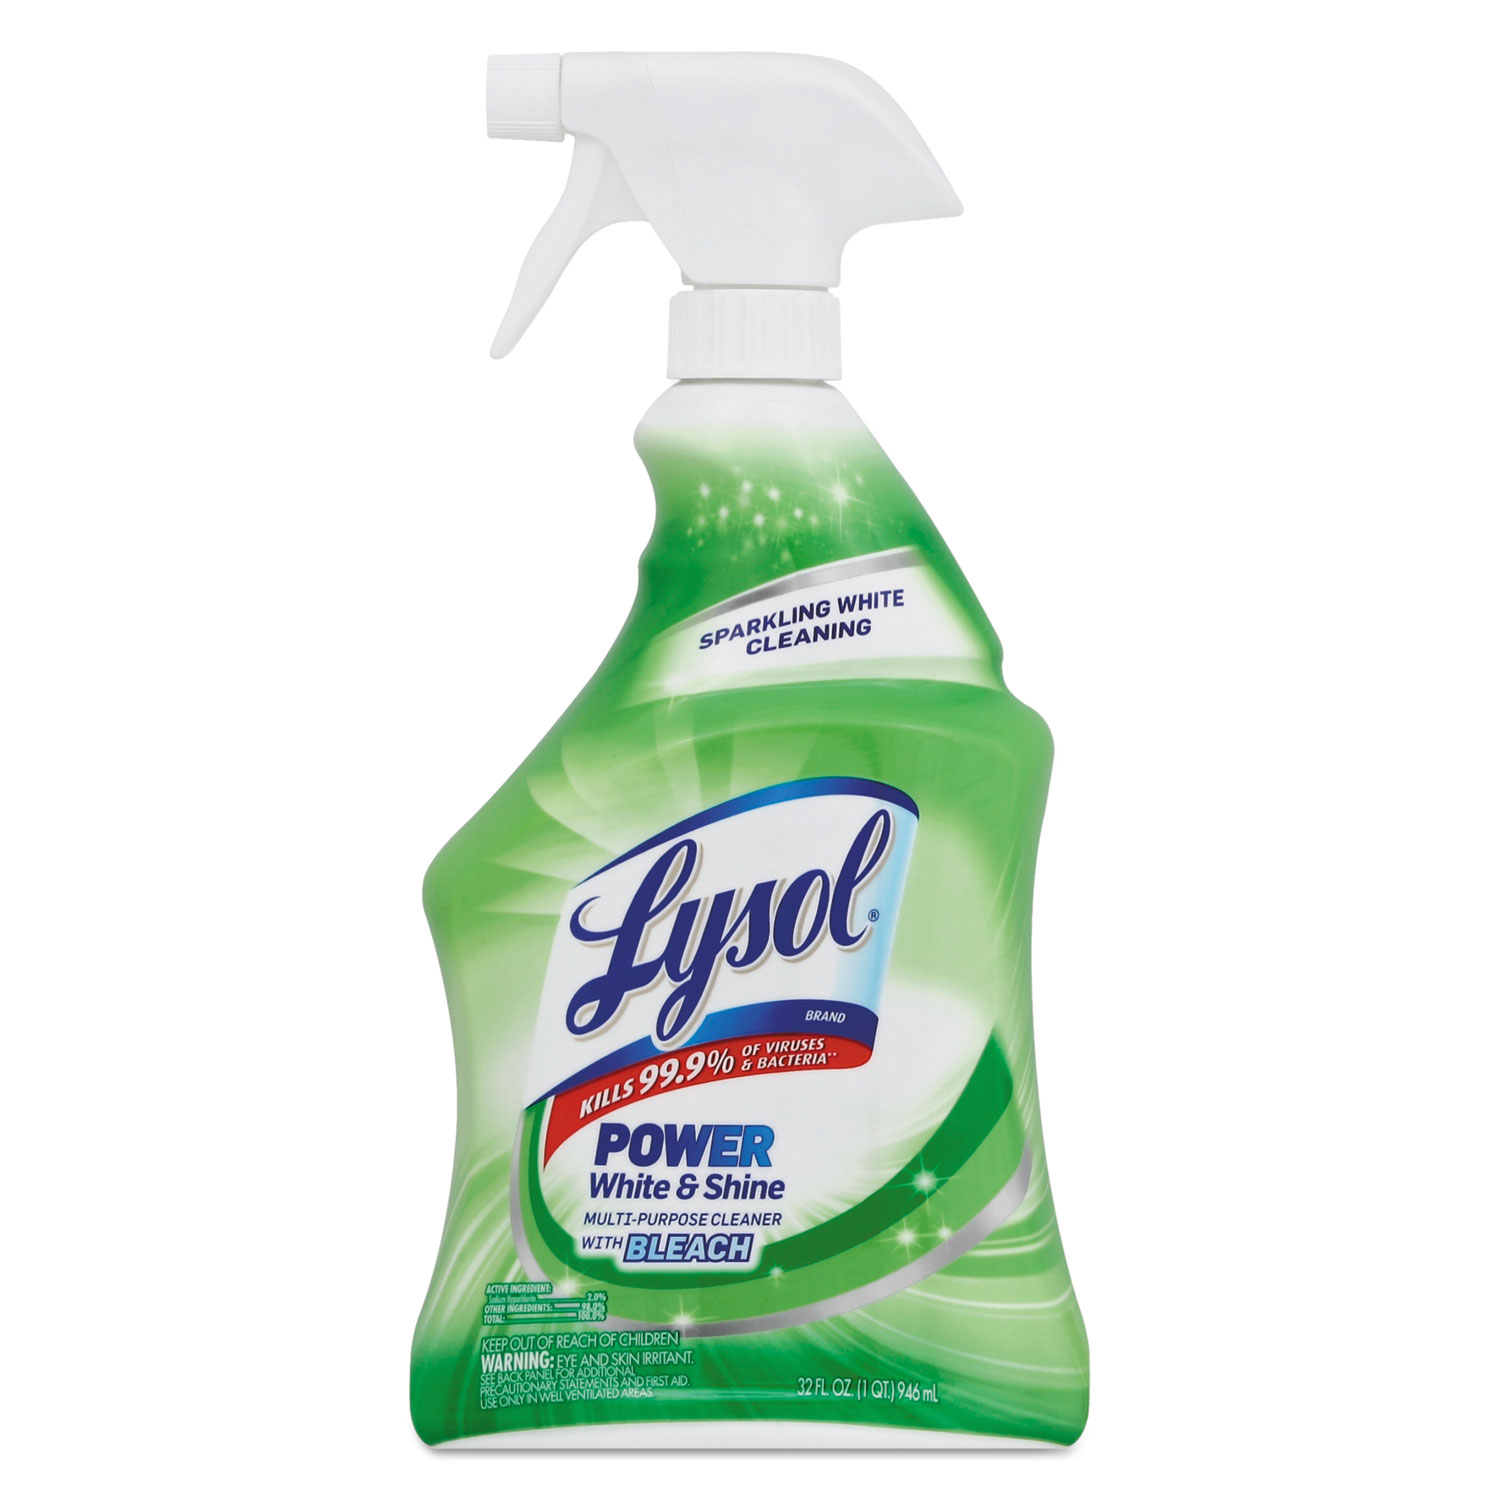 Power White & Shine Multi-Purpose Cleaner with Bleach, 32oz Spray Bottle